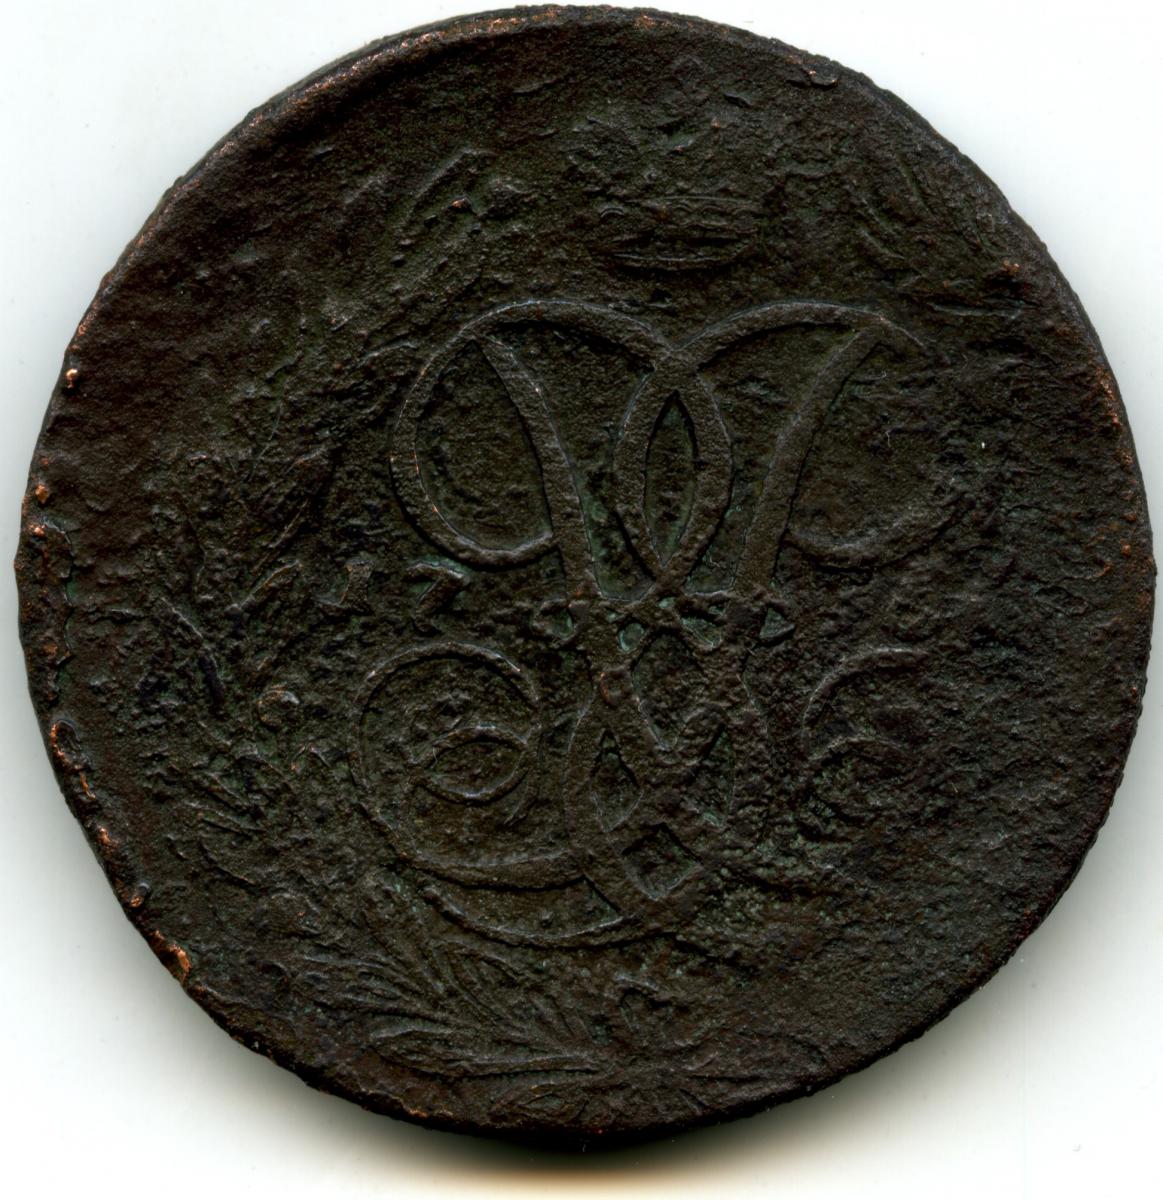 Монеты 1700 цены. 2 Копейки 1758. Две копейки 1758. 2 Копейки 1758 номинал сверху. 2 Копейки Елизаветы.